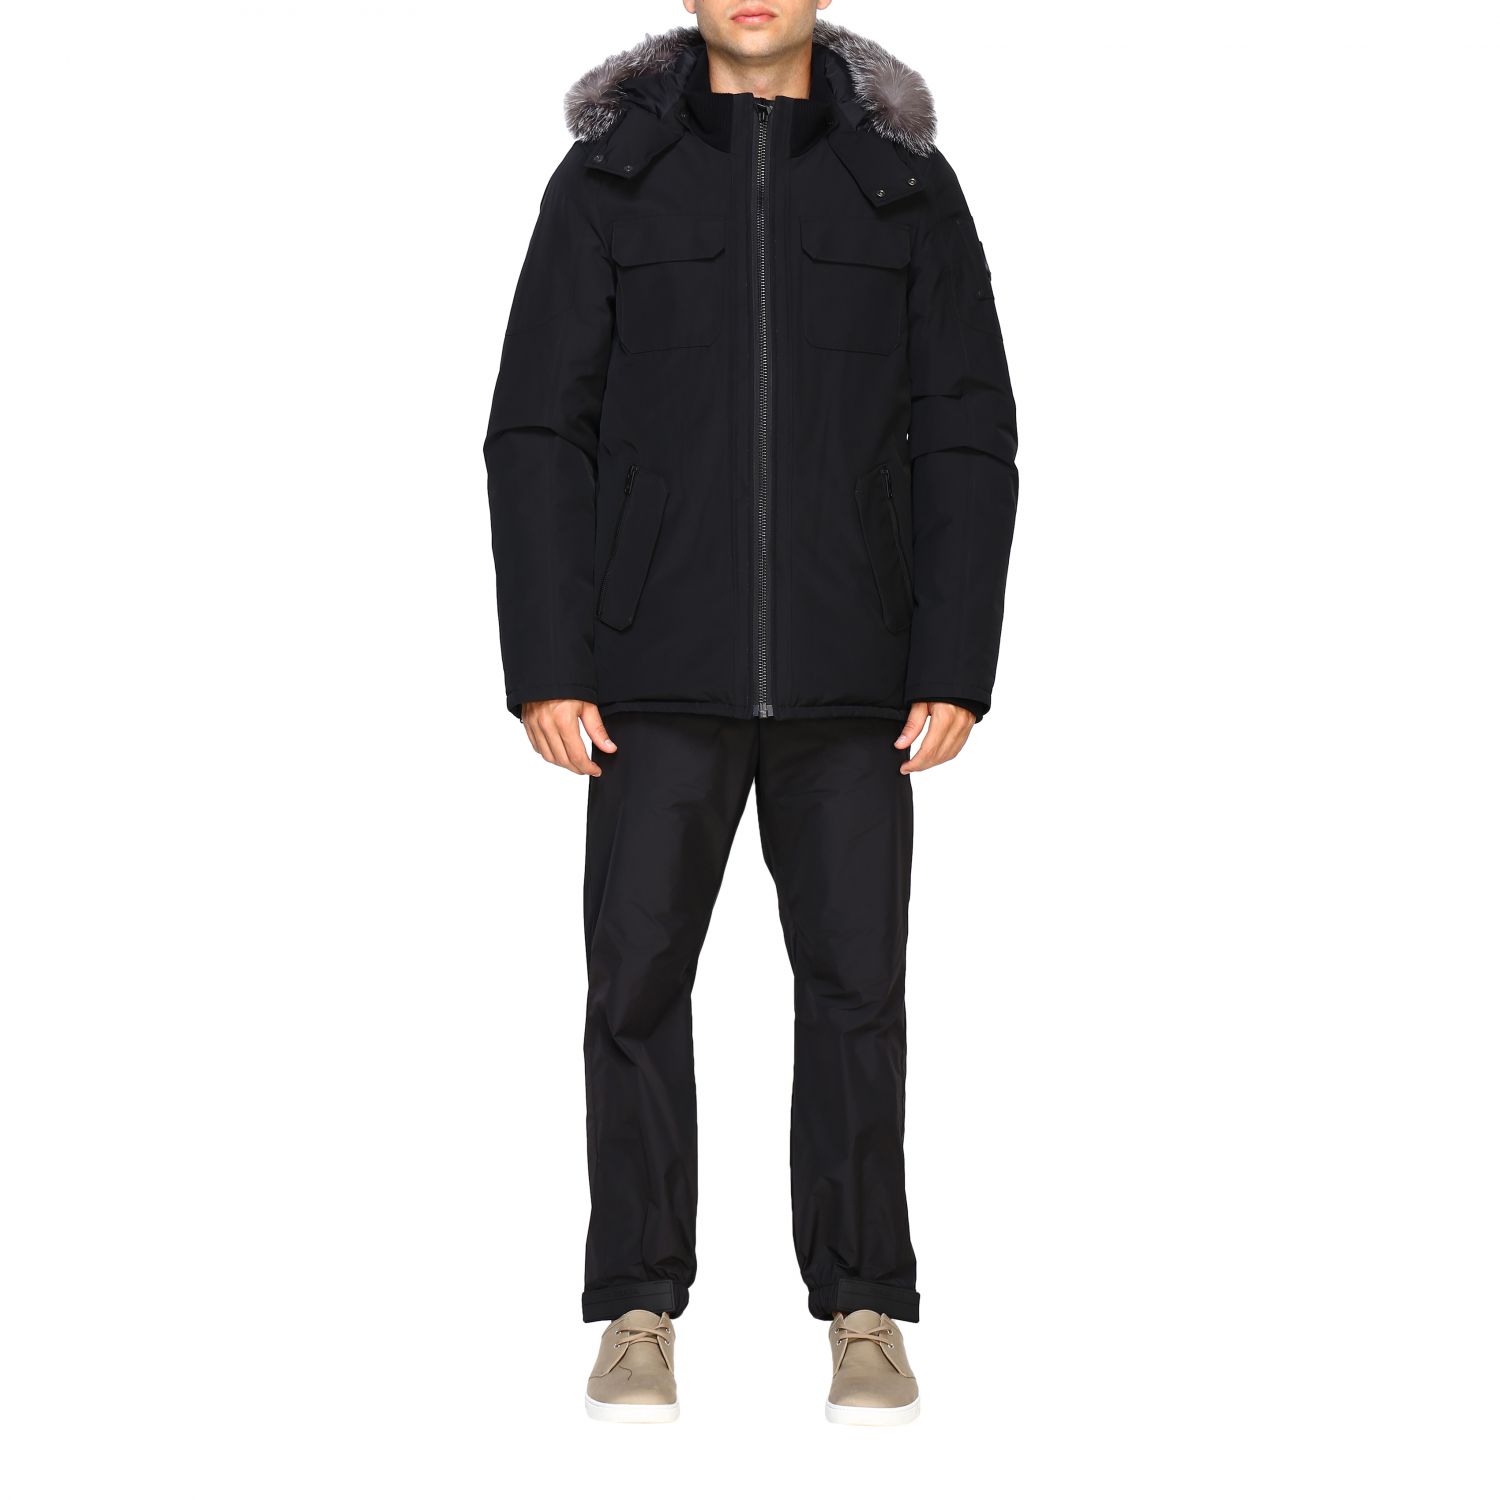 Moose Knuckles Outlet: Lingan jacket with hood and fur trim | Jacket ...